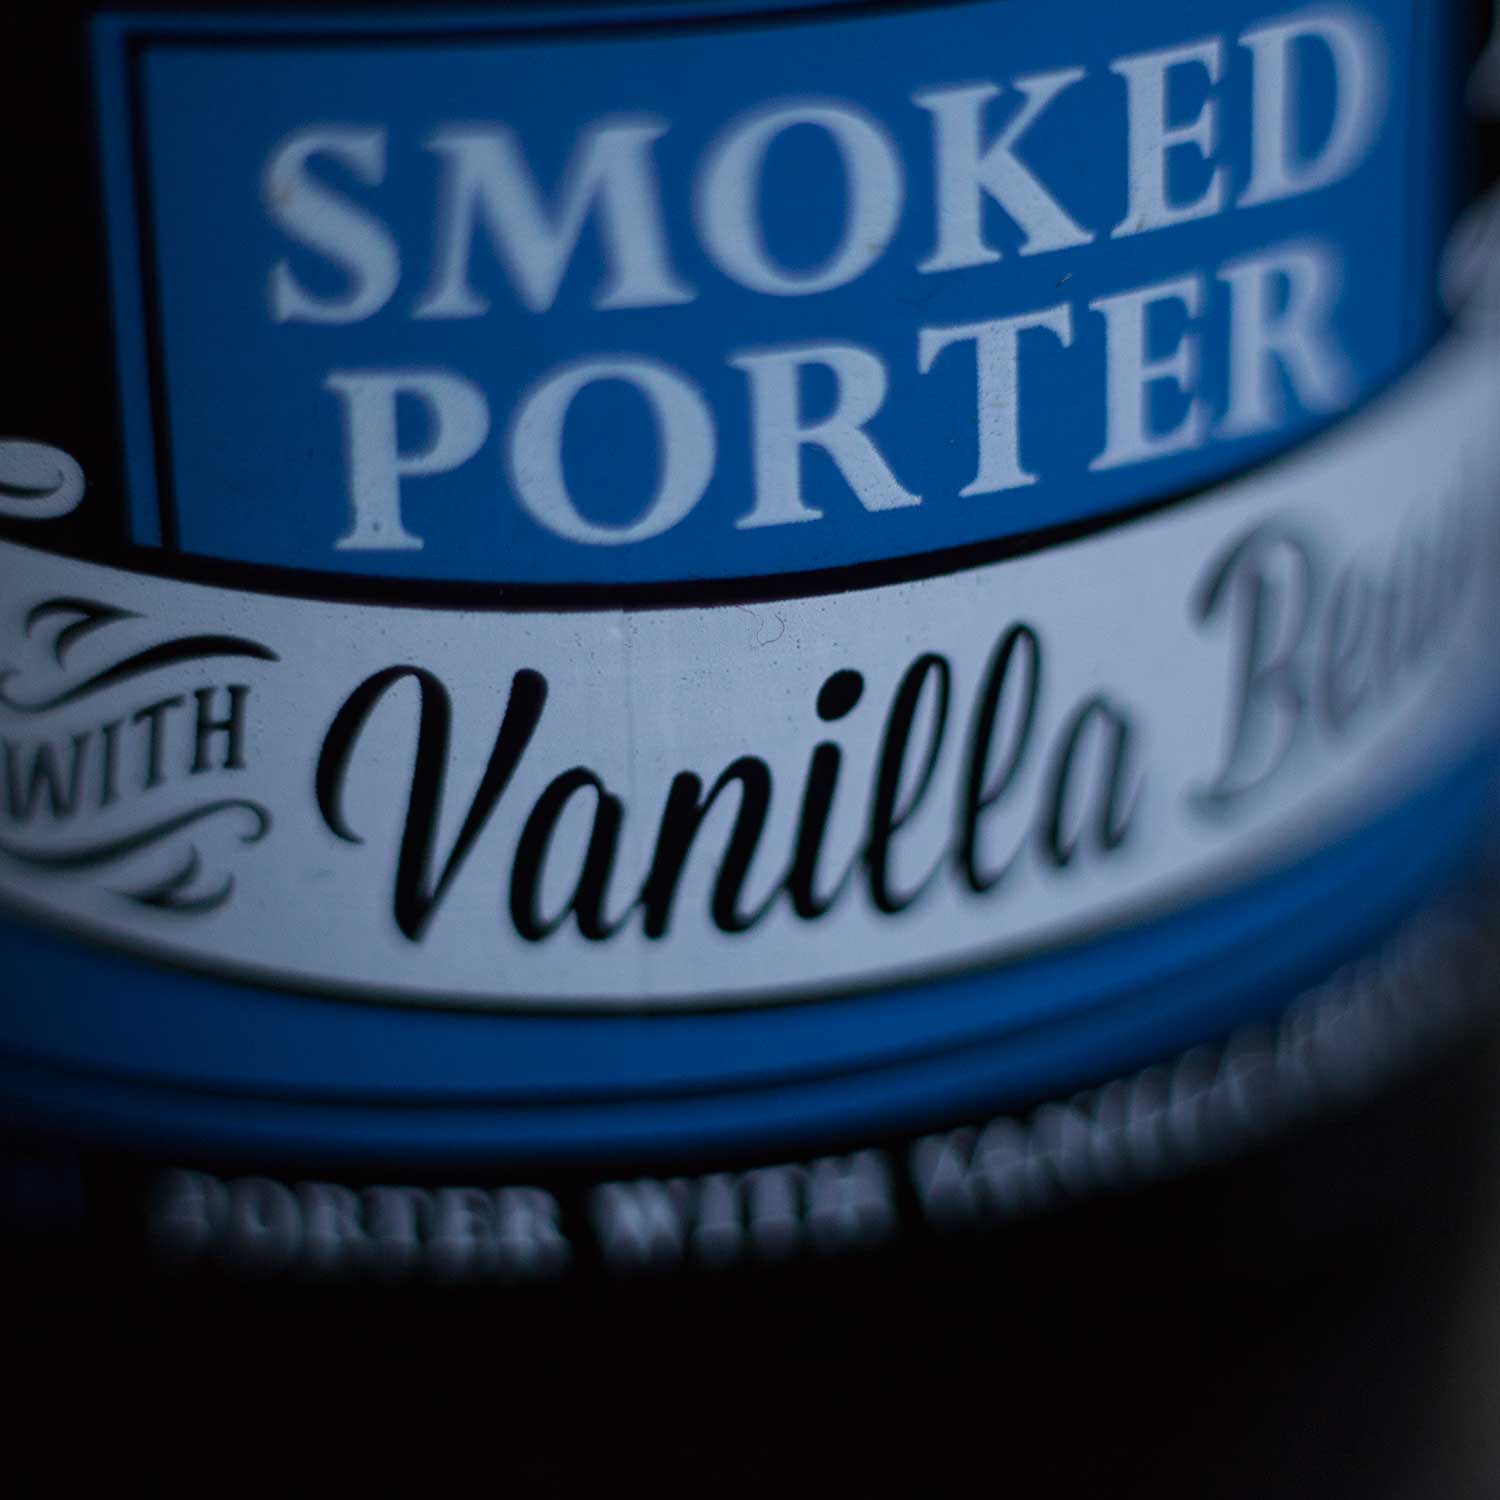 Stone smoked porter with vanilla